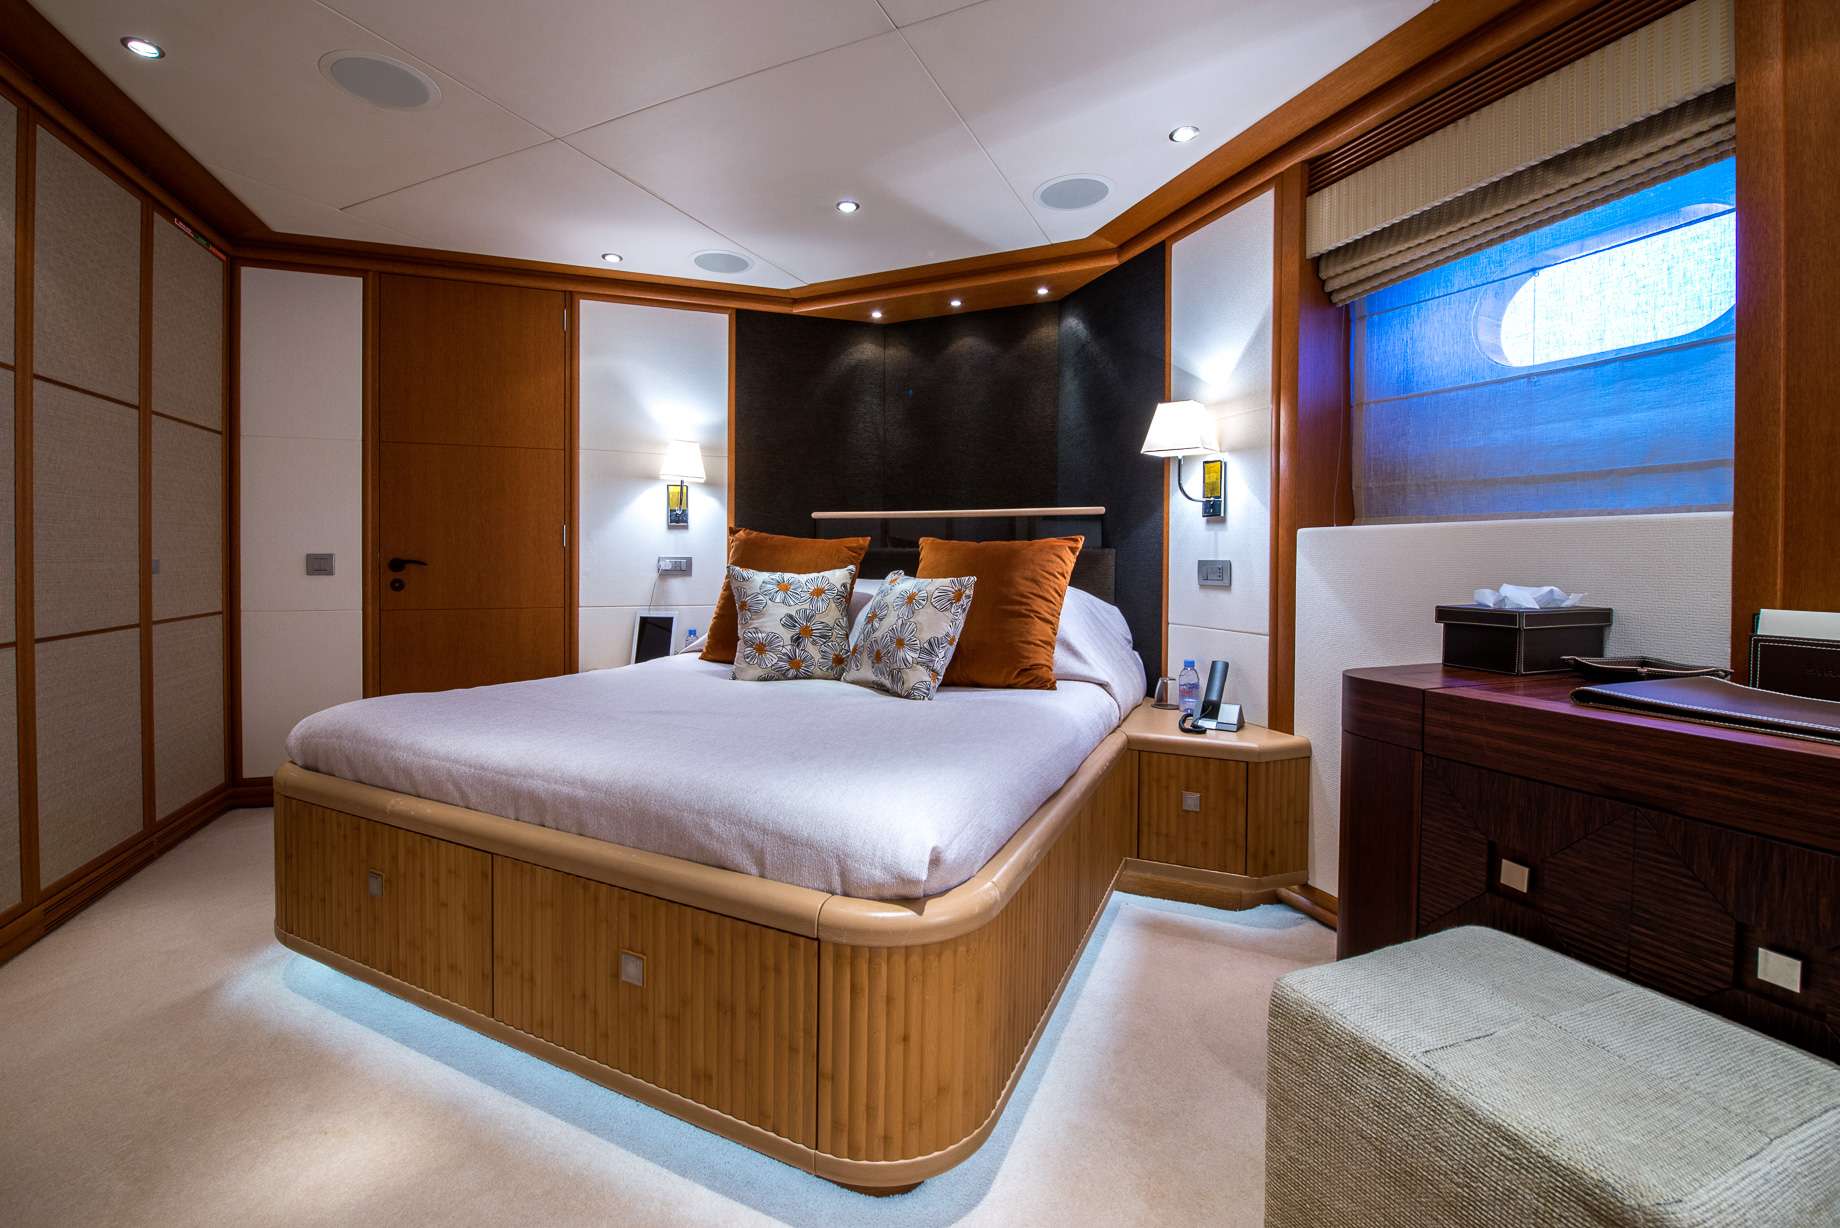 Motor Yacht 'SIROCCO' guest cabin, 12 PAX, 154.00 Ft, 47.00 Meters, Built 2006, Heesen, Refit Year 2015